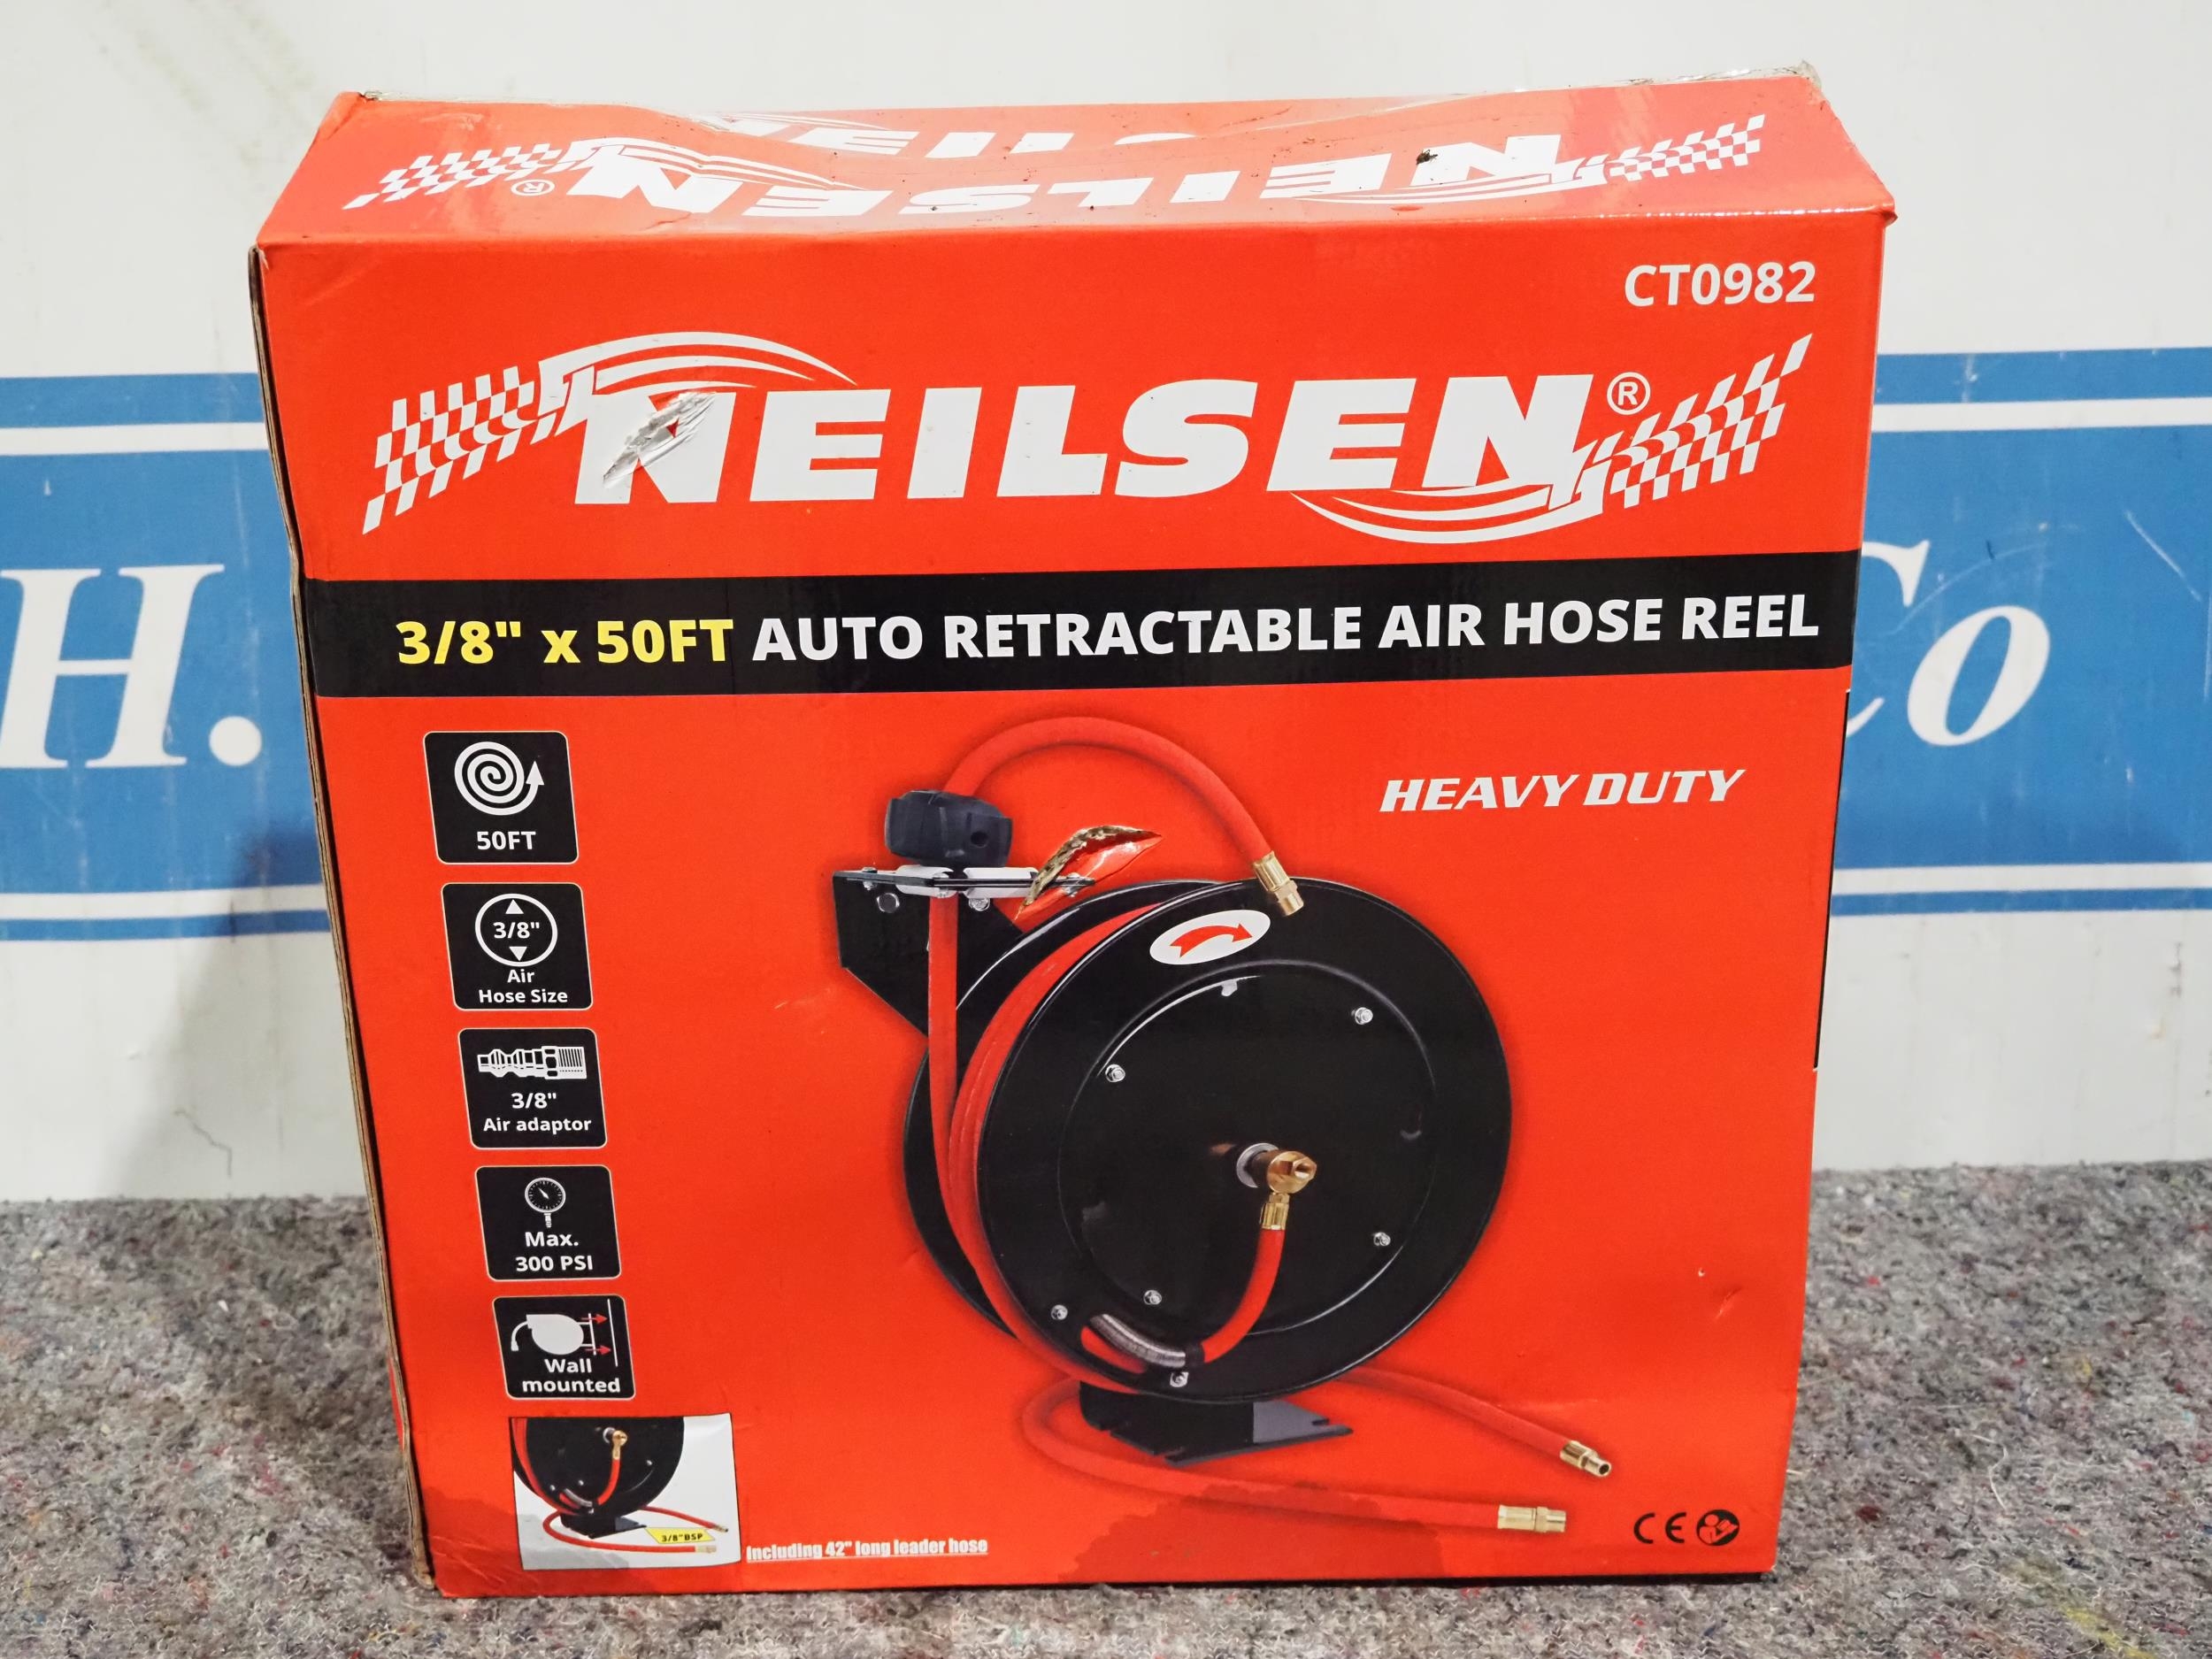 Neilson auto retractable air hose reel 3/8 x 50ft